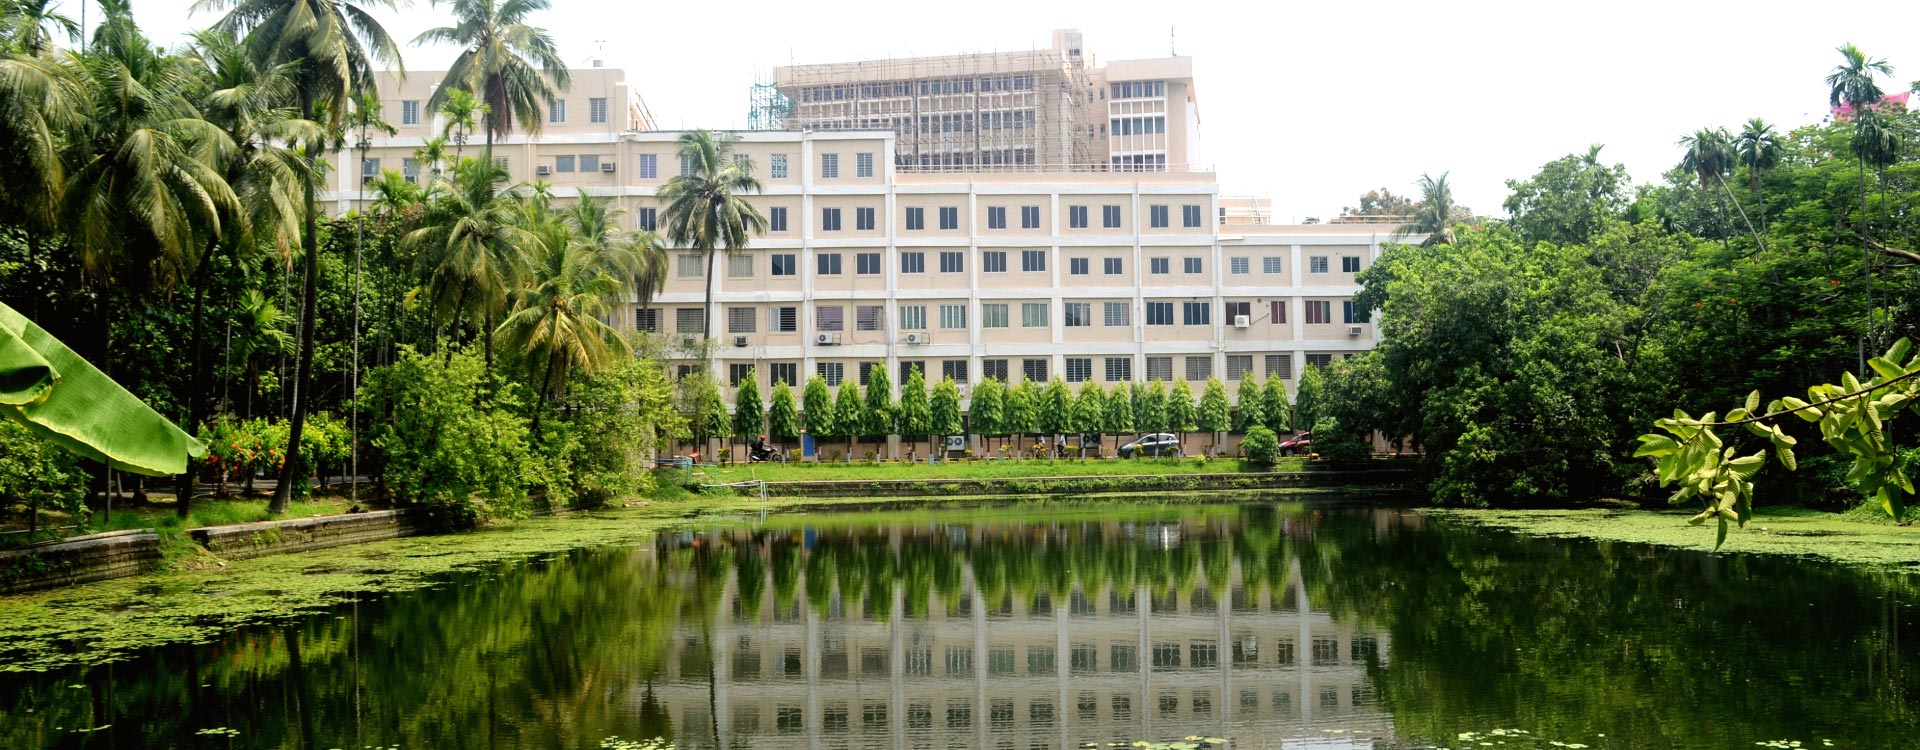 Indian Statistical Institute, Kolkata Image